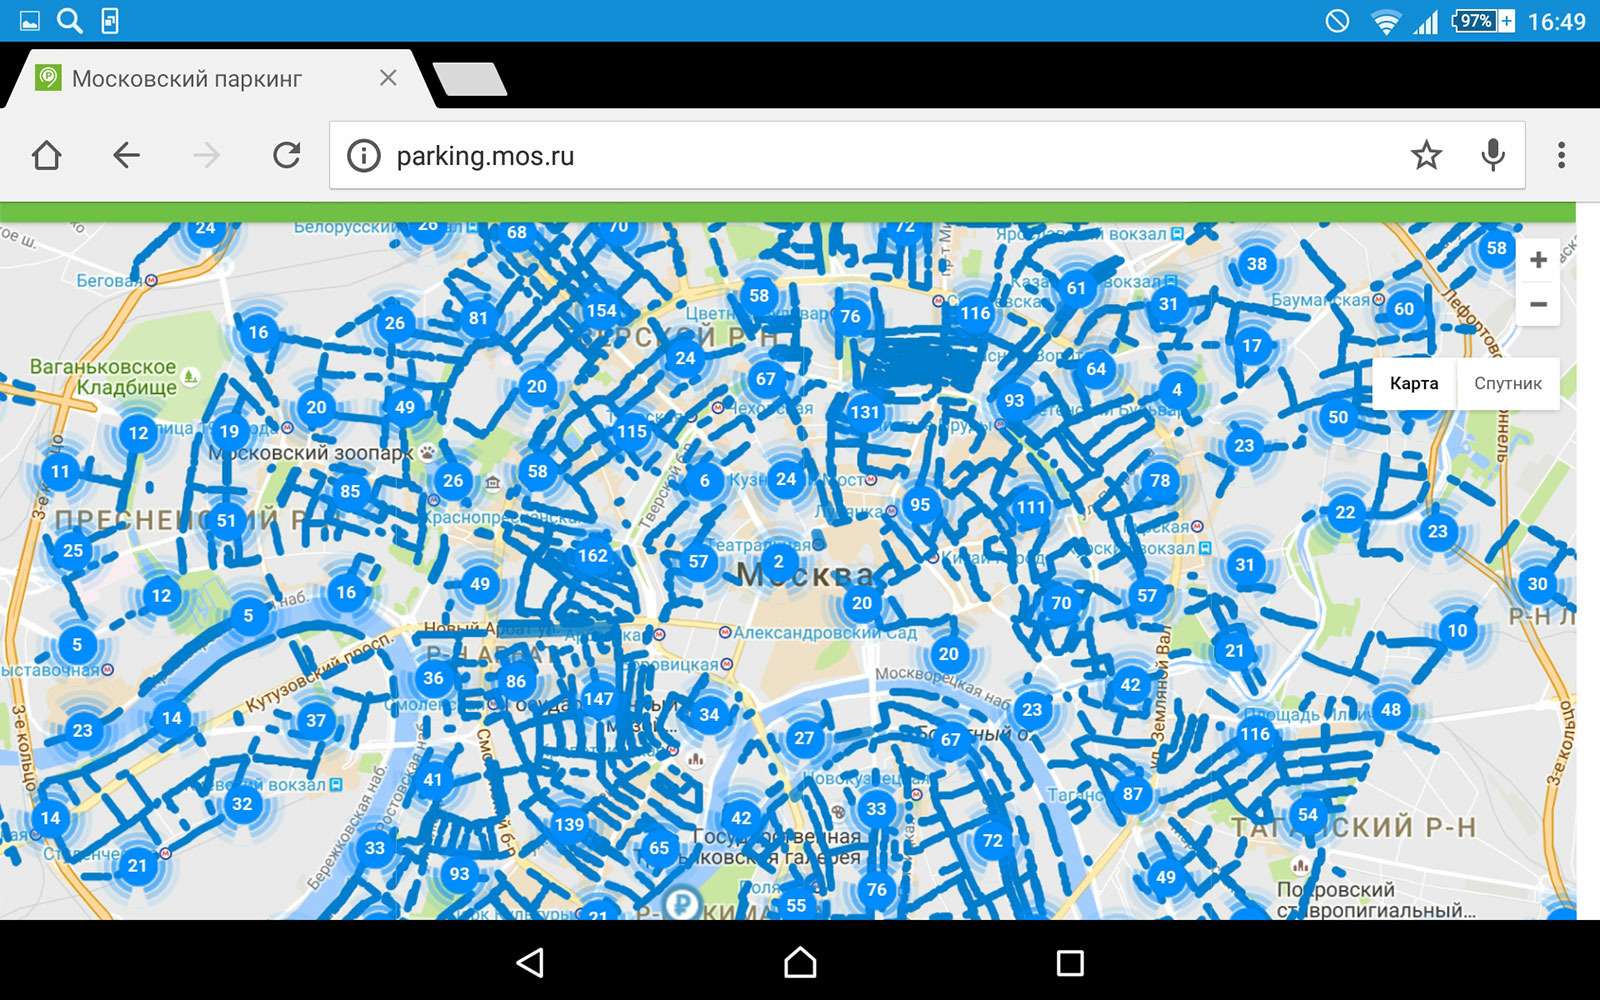 Карта московских парковок, 2016